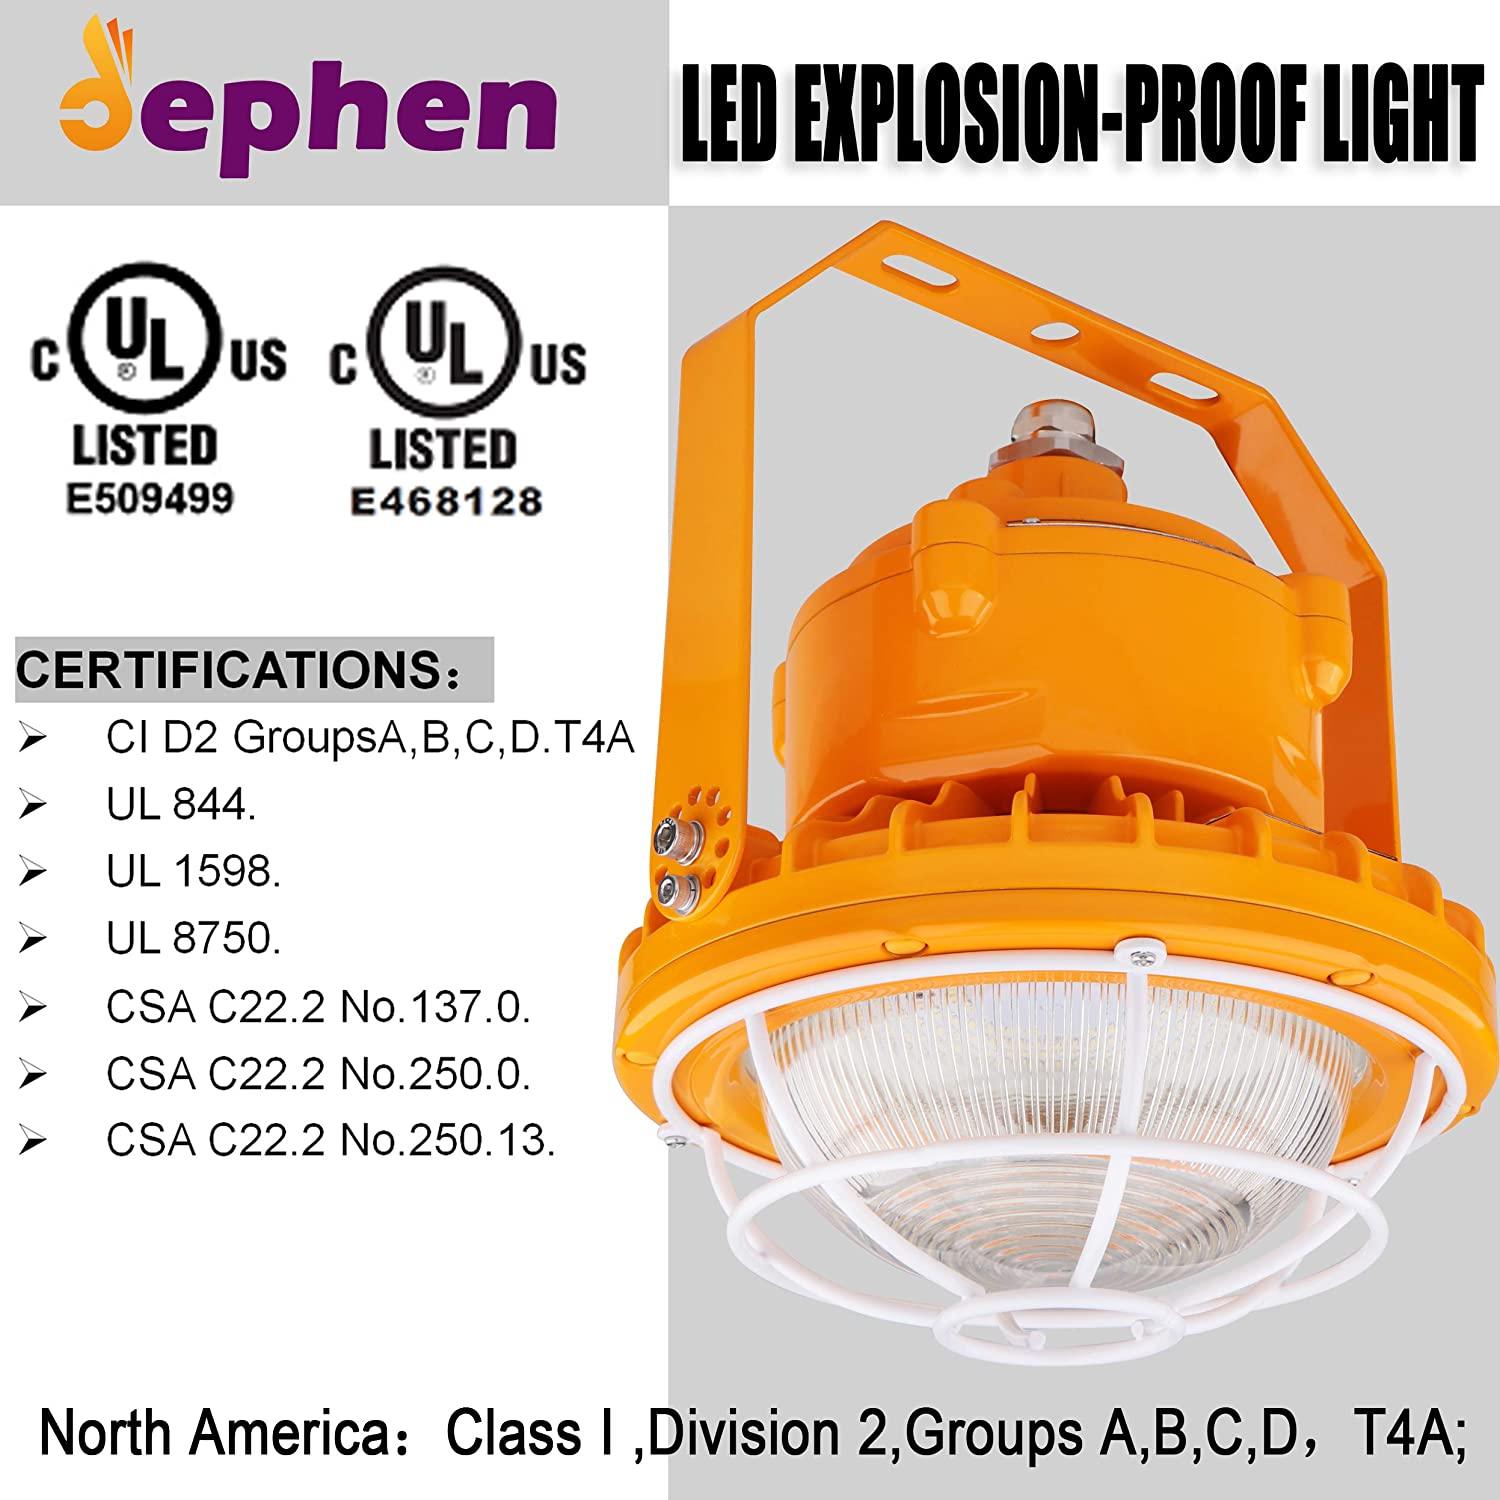 60W LED Explosion Proof Light 8400 Lumen 5700K, UL 844 Certified Class I Division II High Bay Warehouse Lighting - Dephen